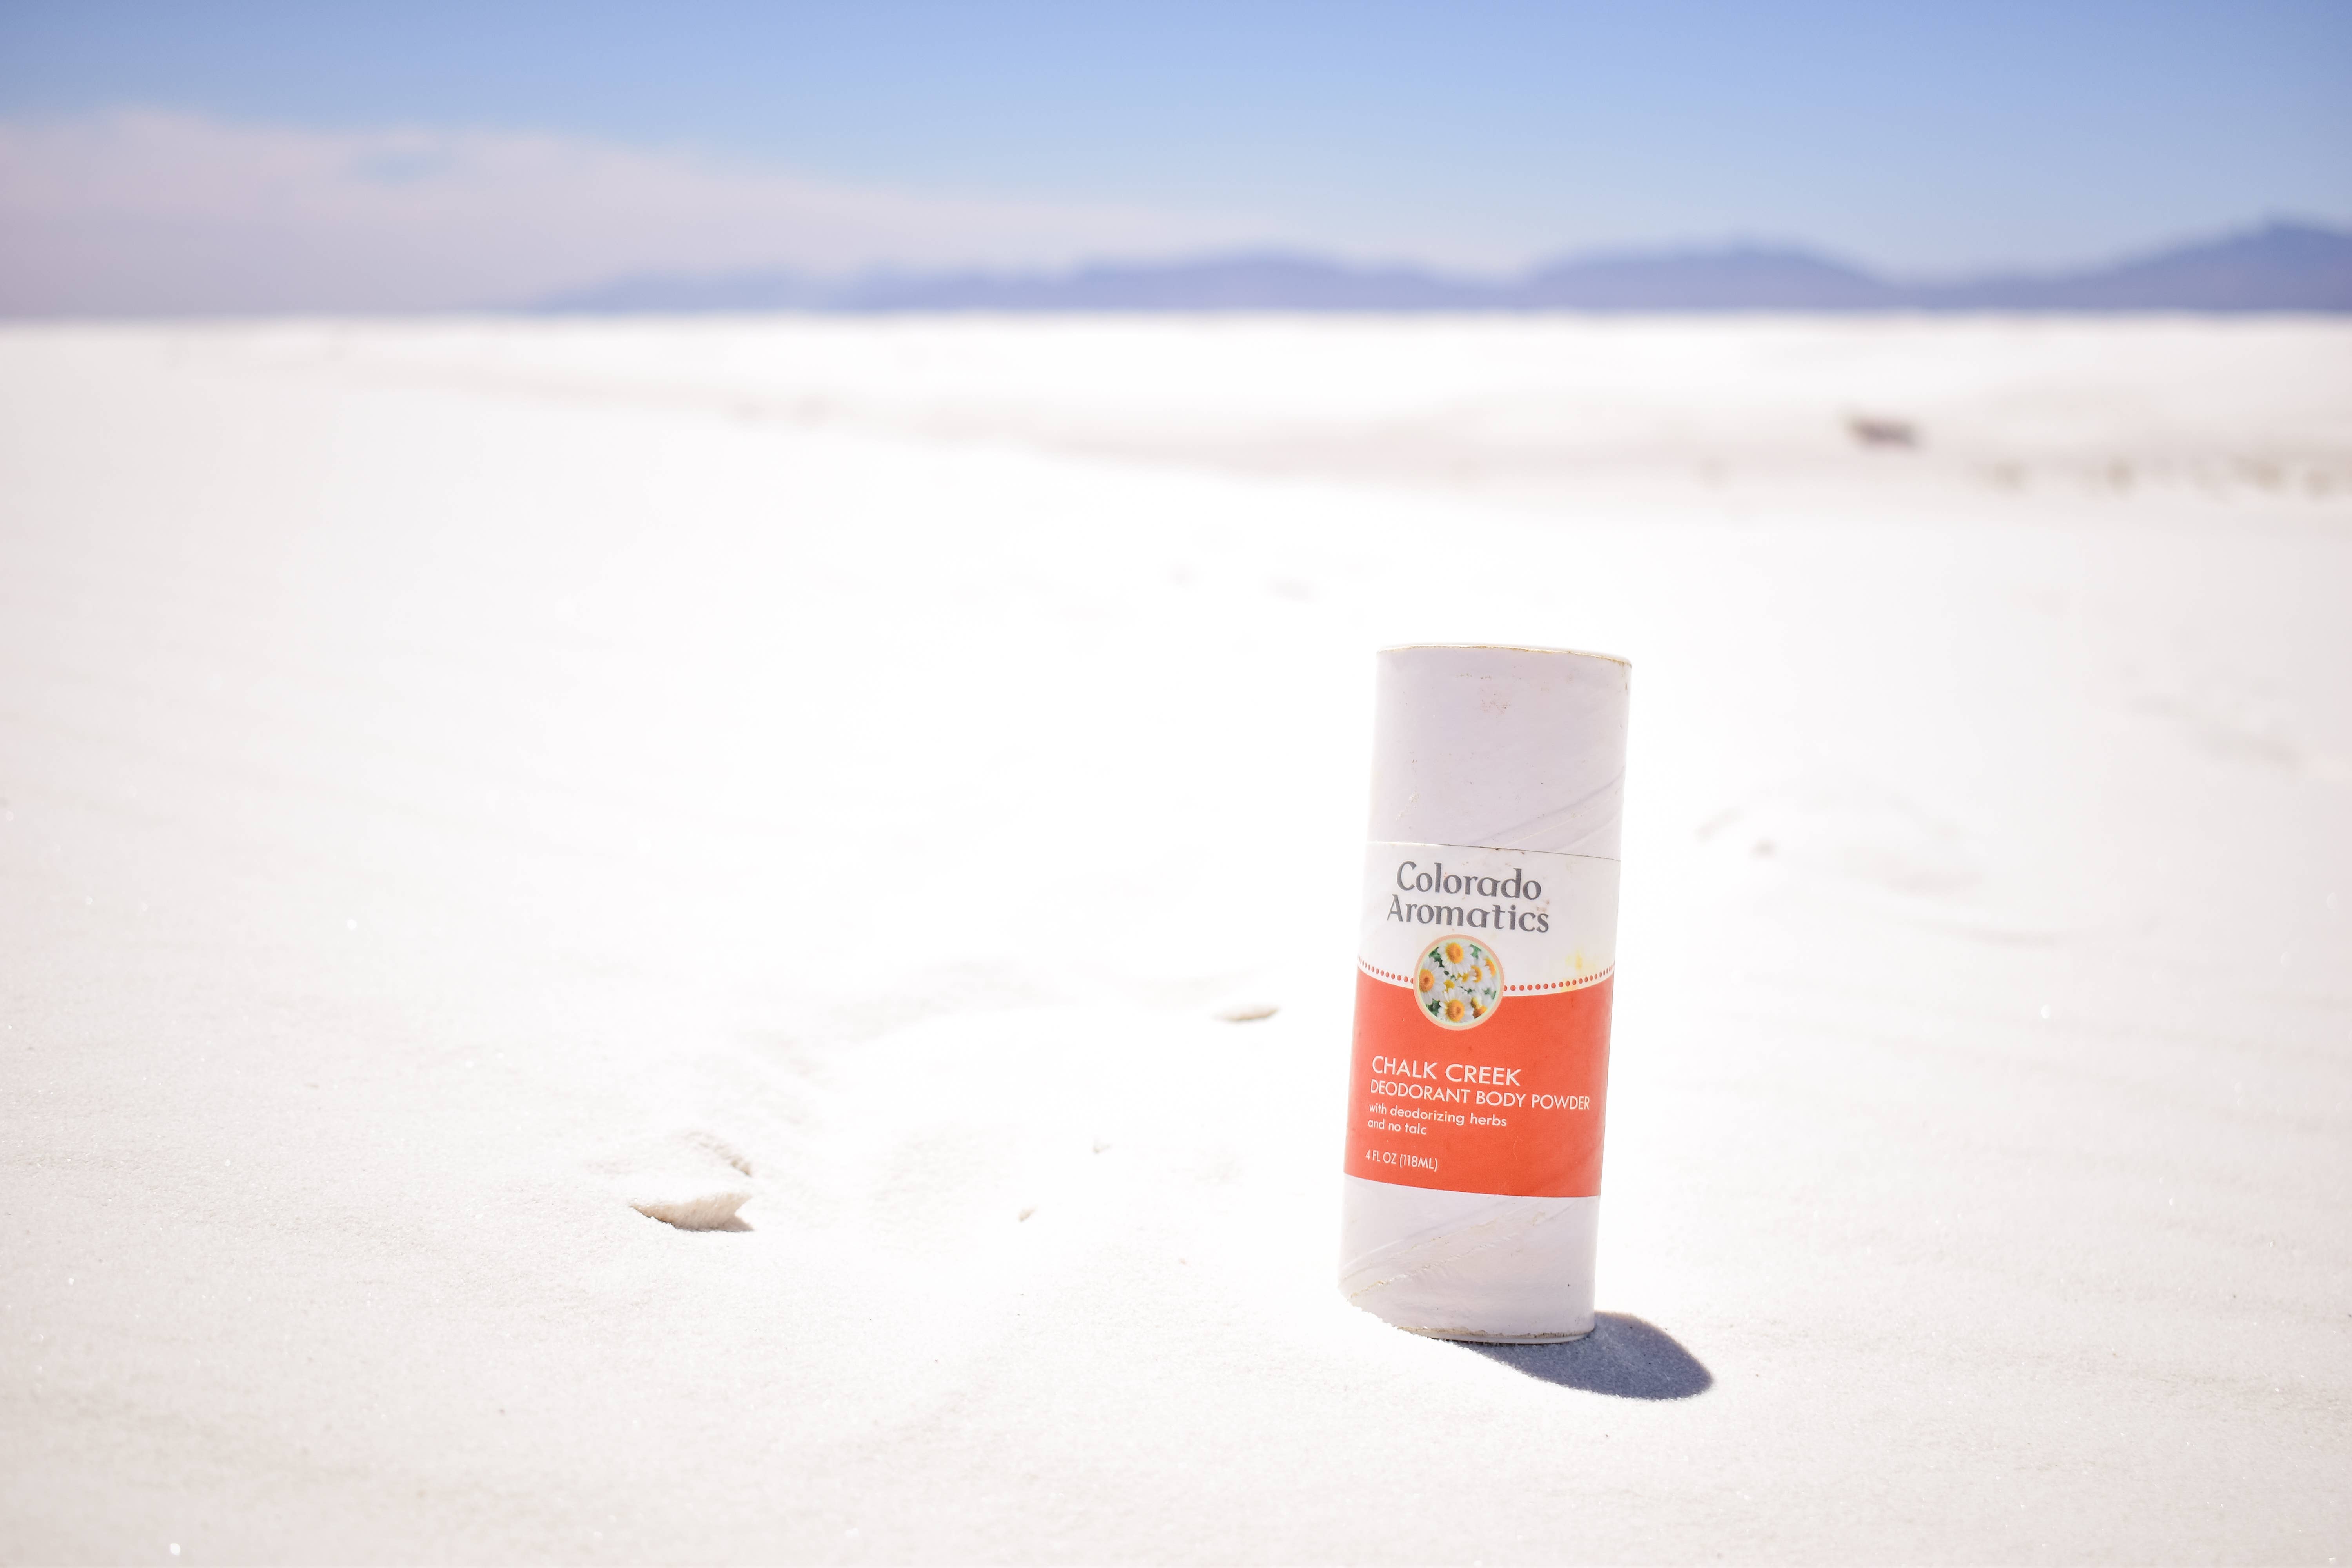 Chalk Creek Deodorant Powder - Colorado Aromatics